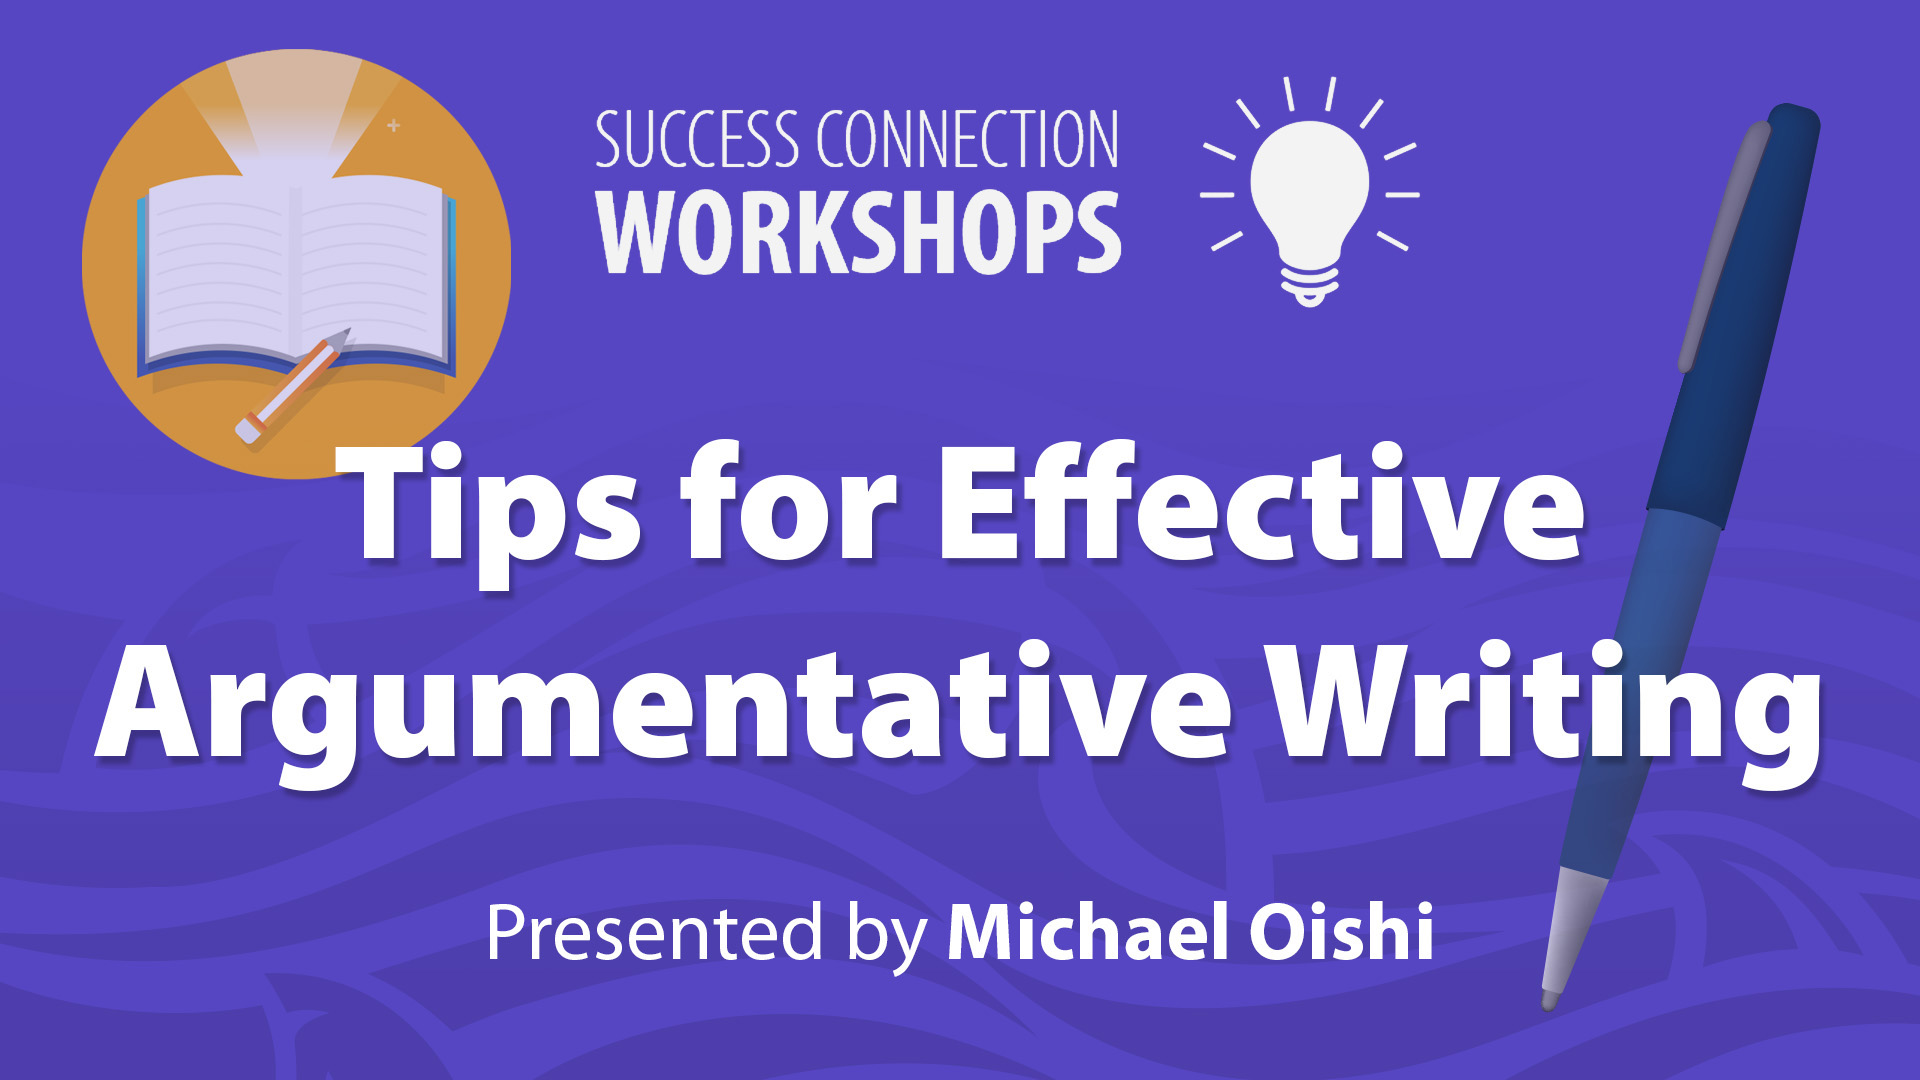 Success Connection Workshops Tips for Effective Argumentative Writing